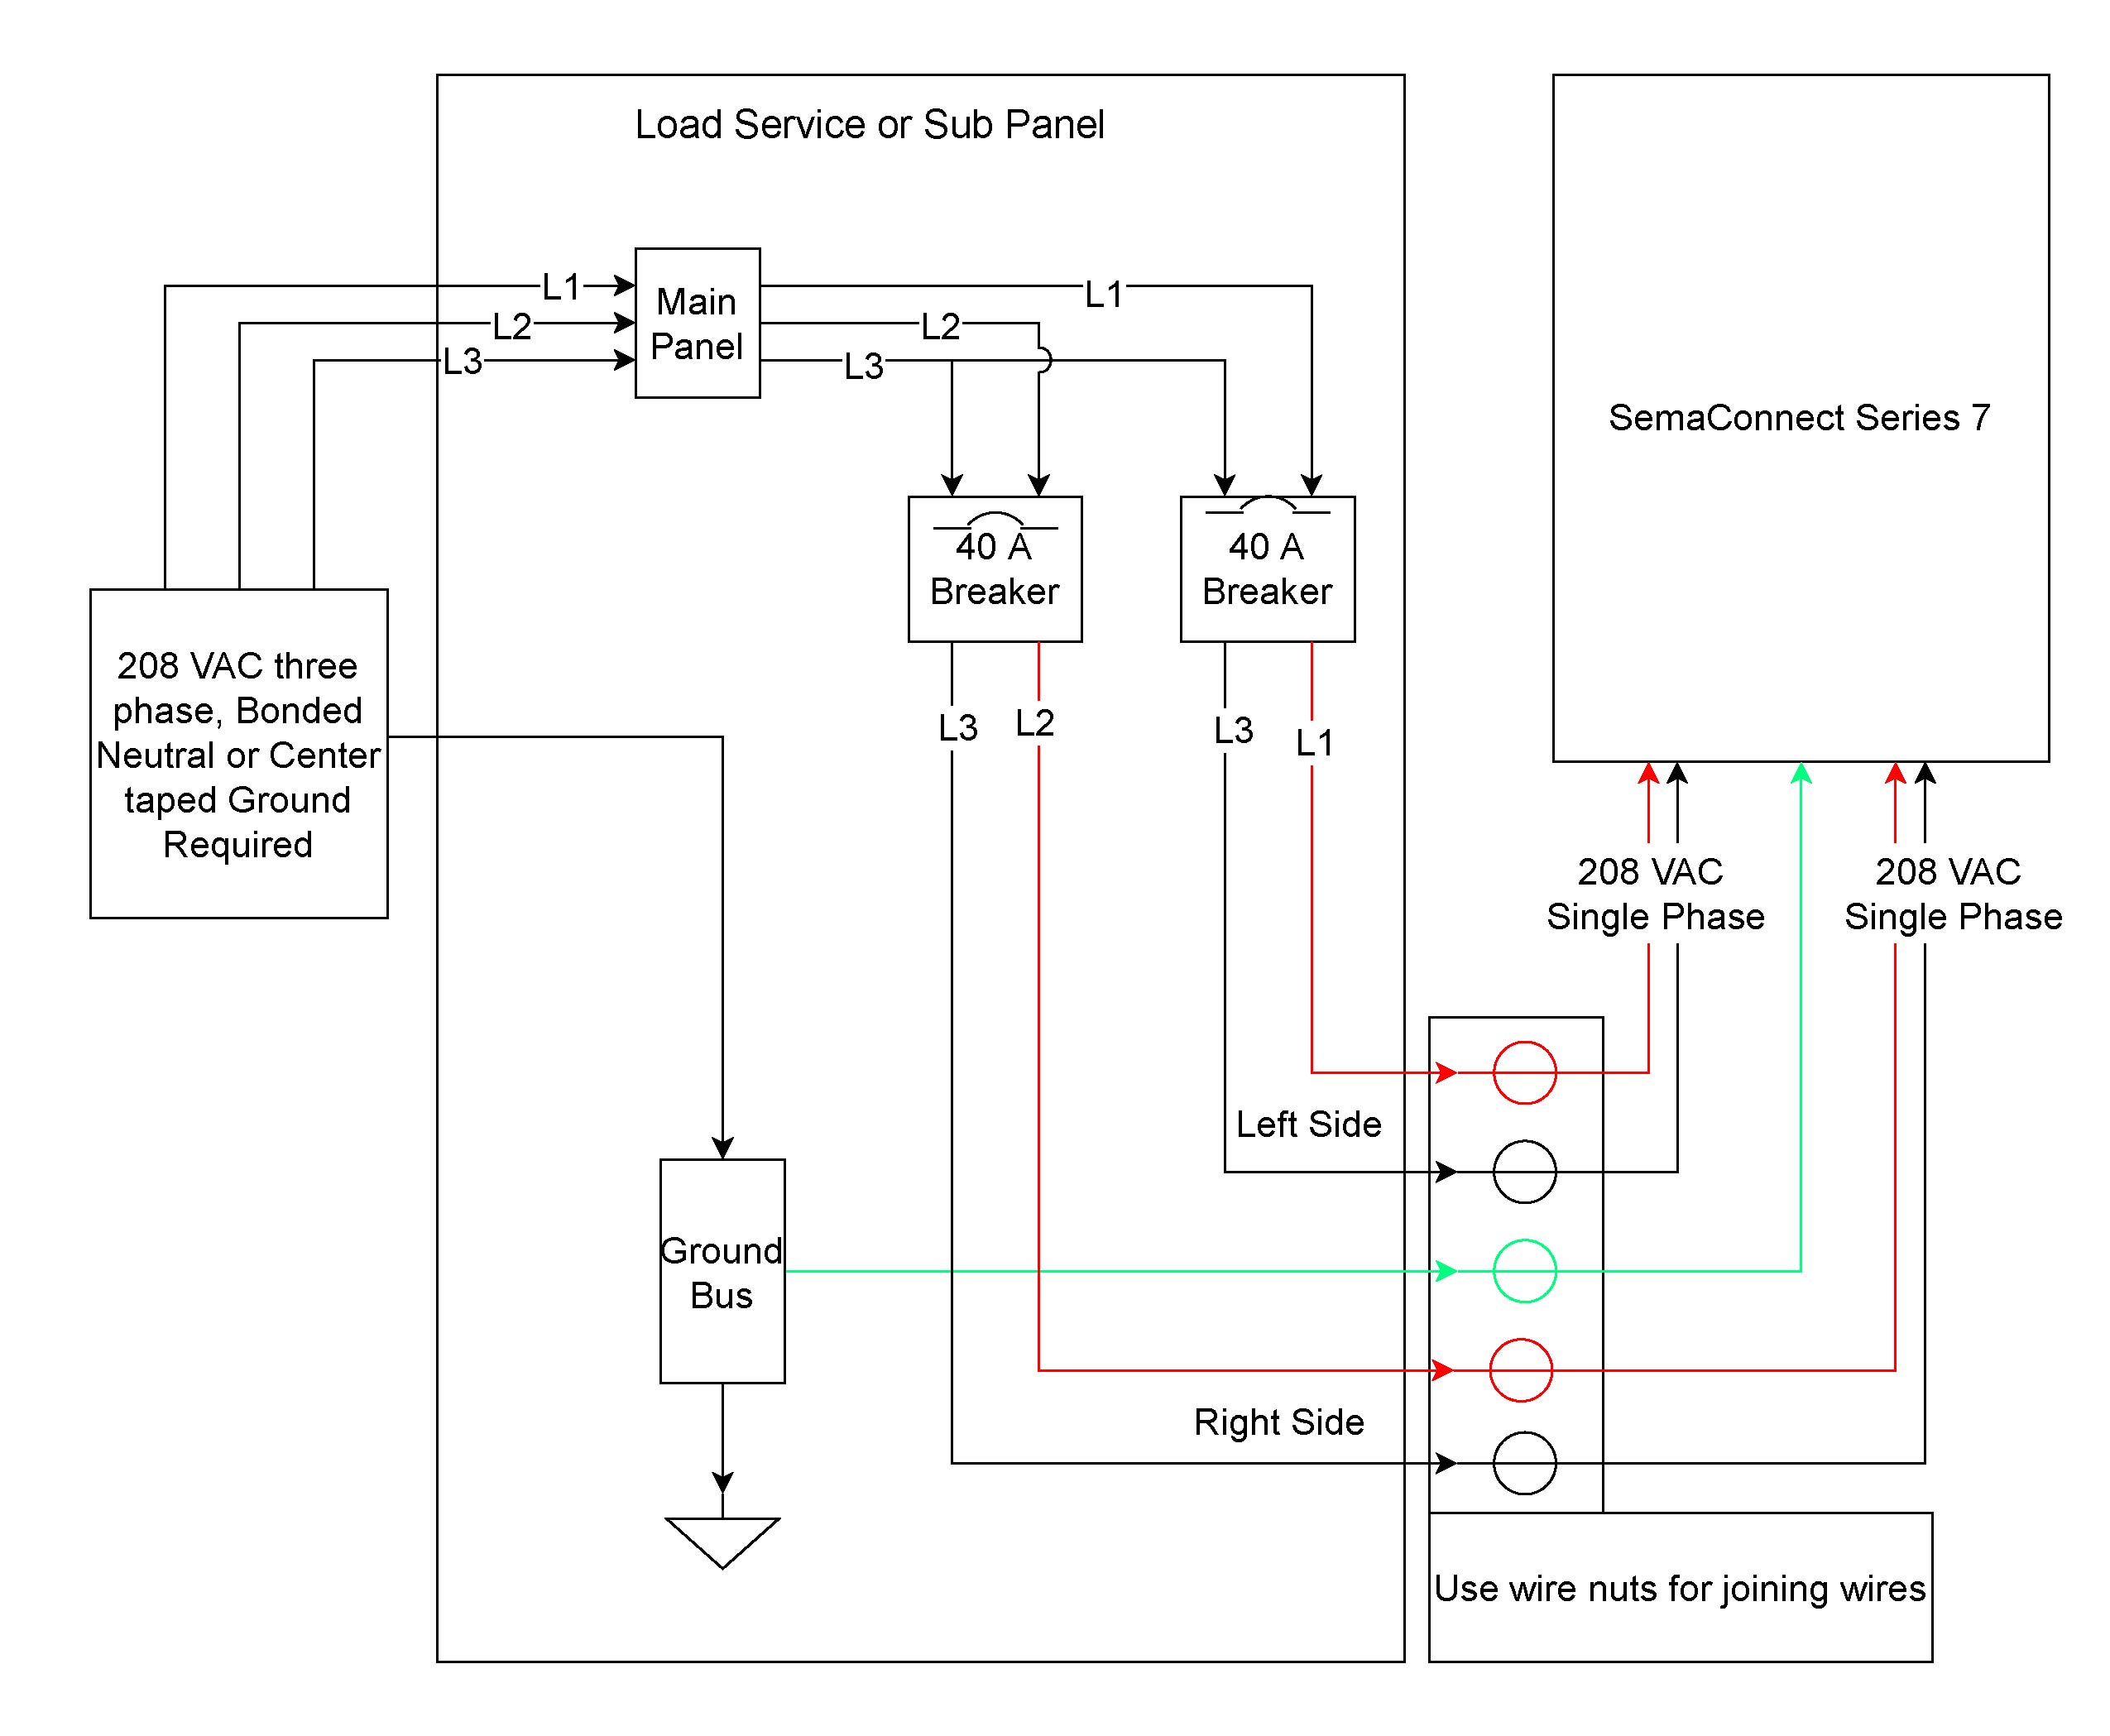 fia master switch wiring diagram